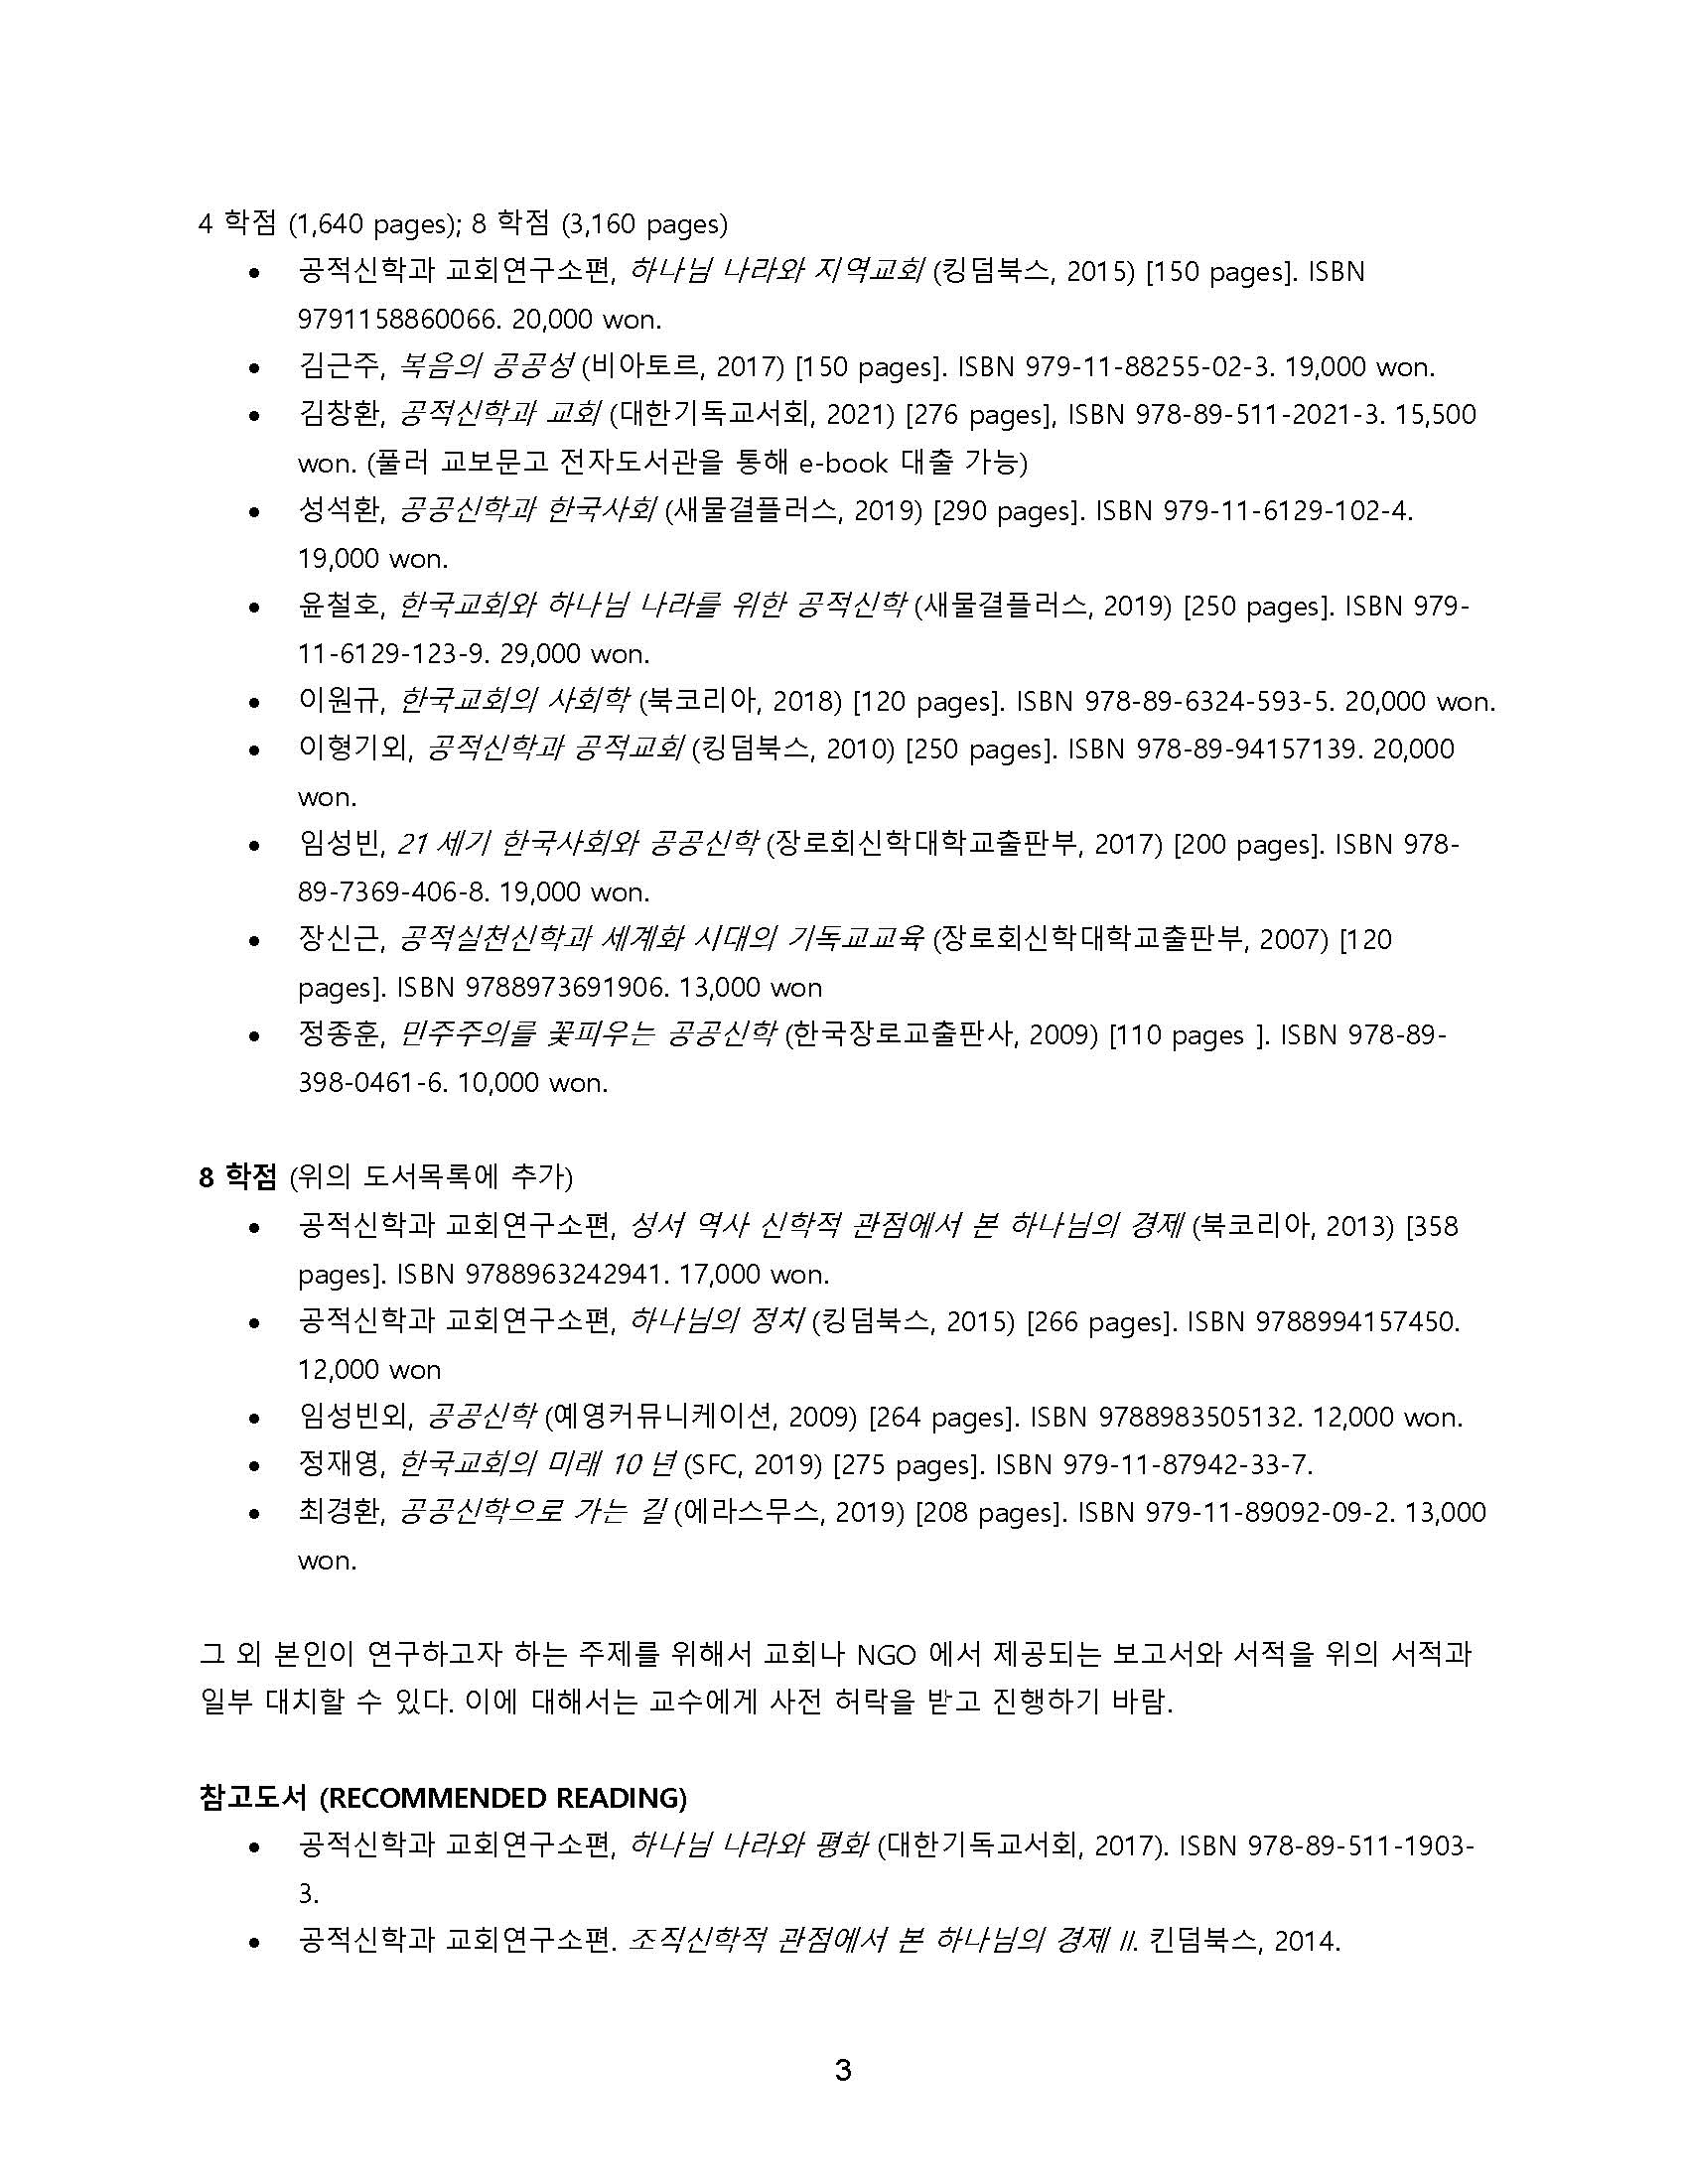 TH741 Public Theology - Korean - syllabus (1)_Page_03.jpg